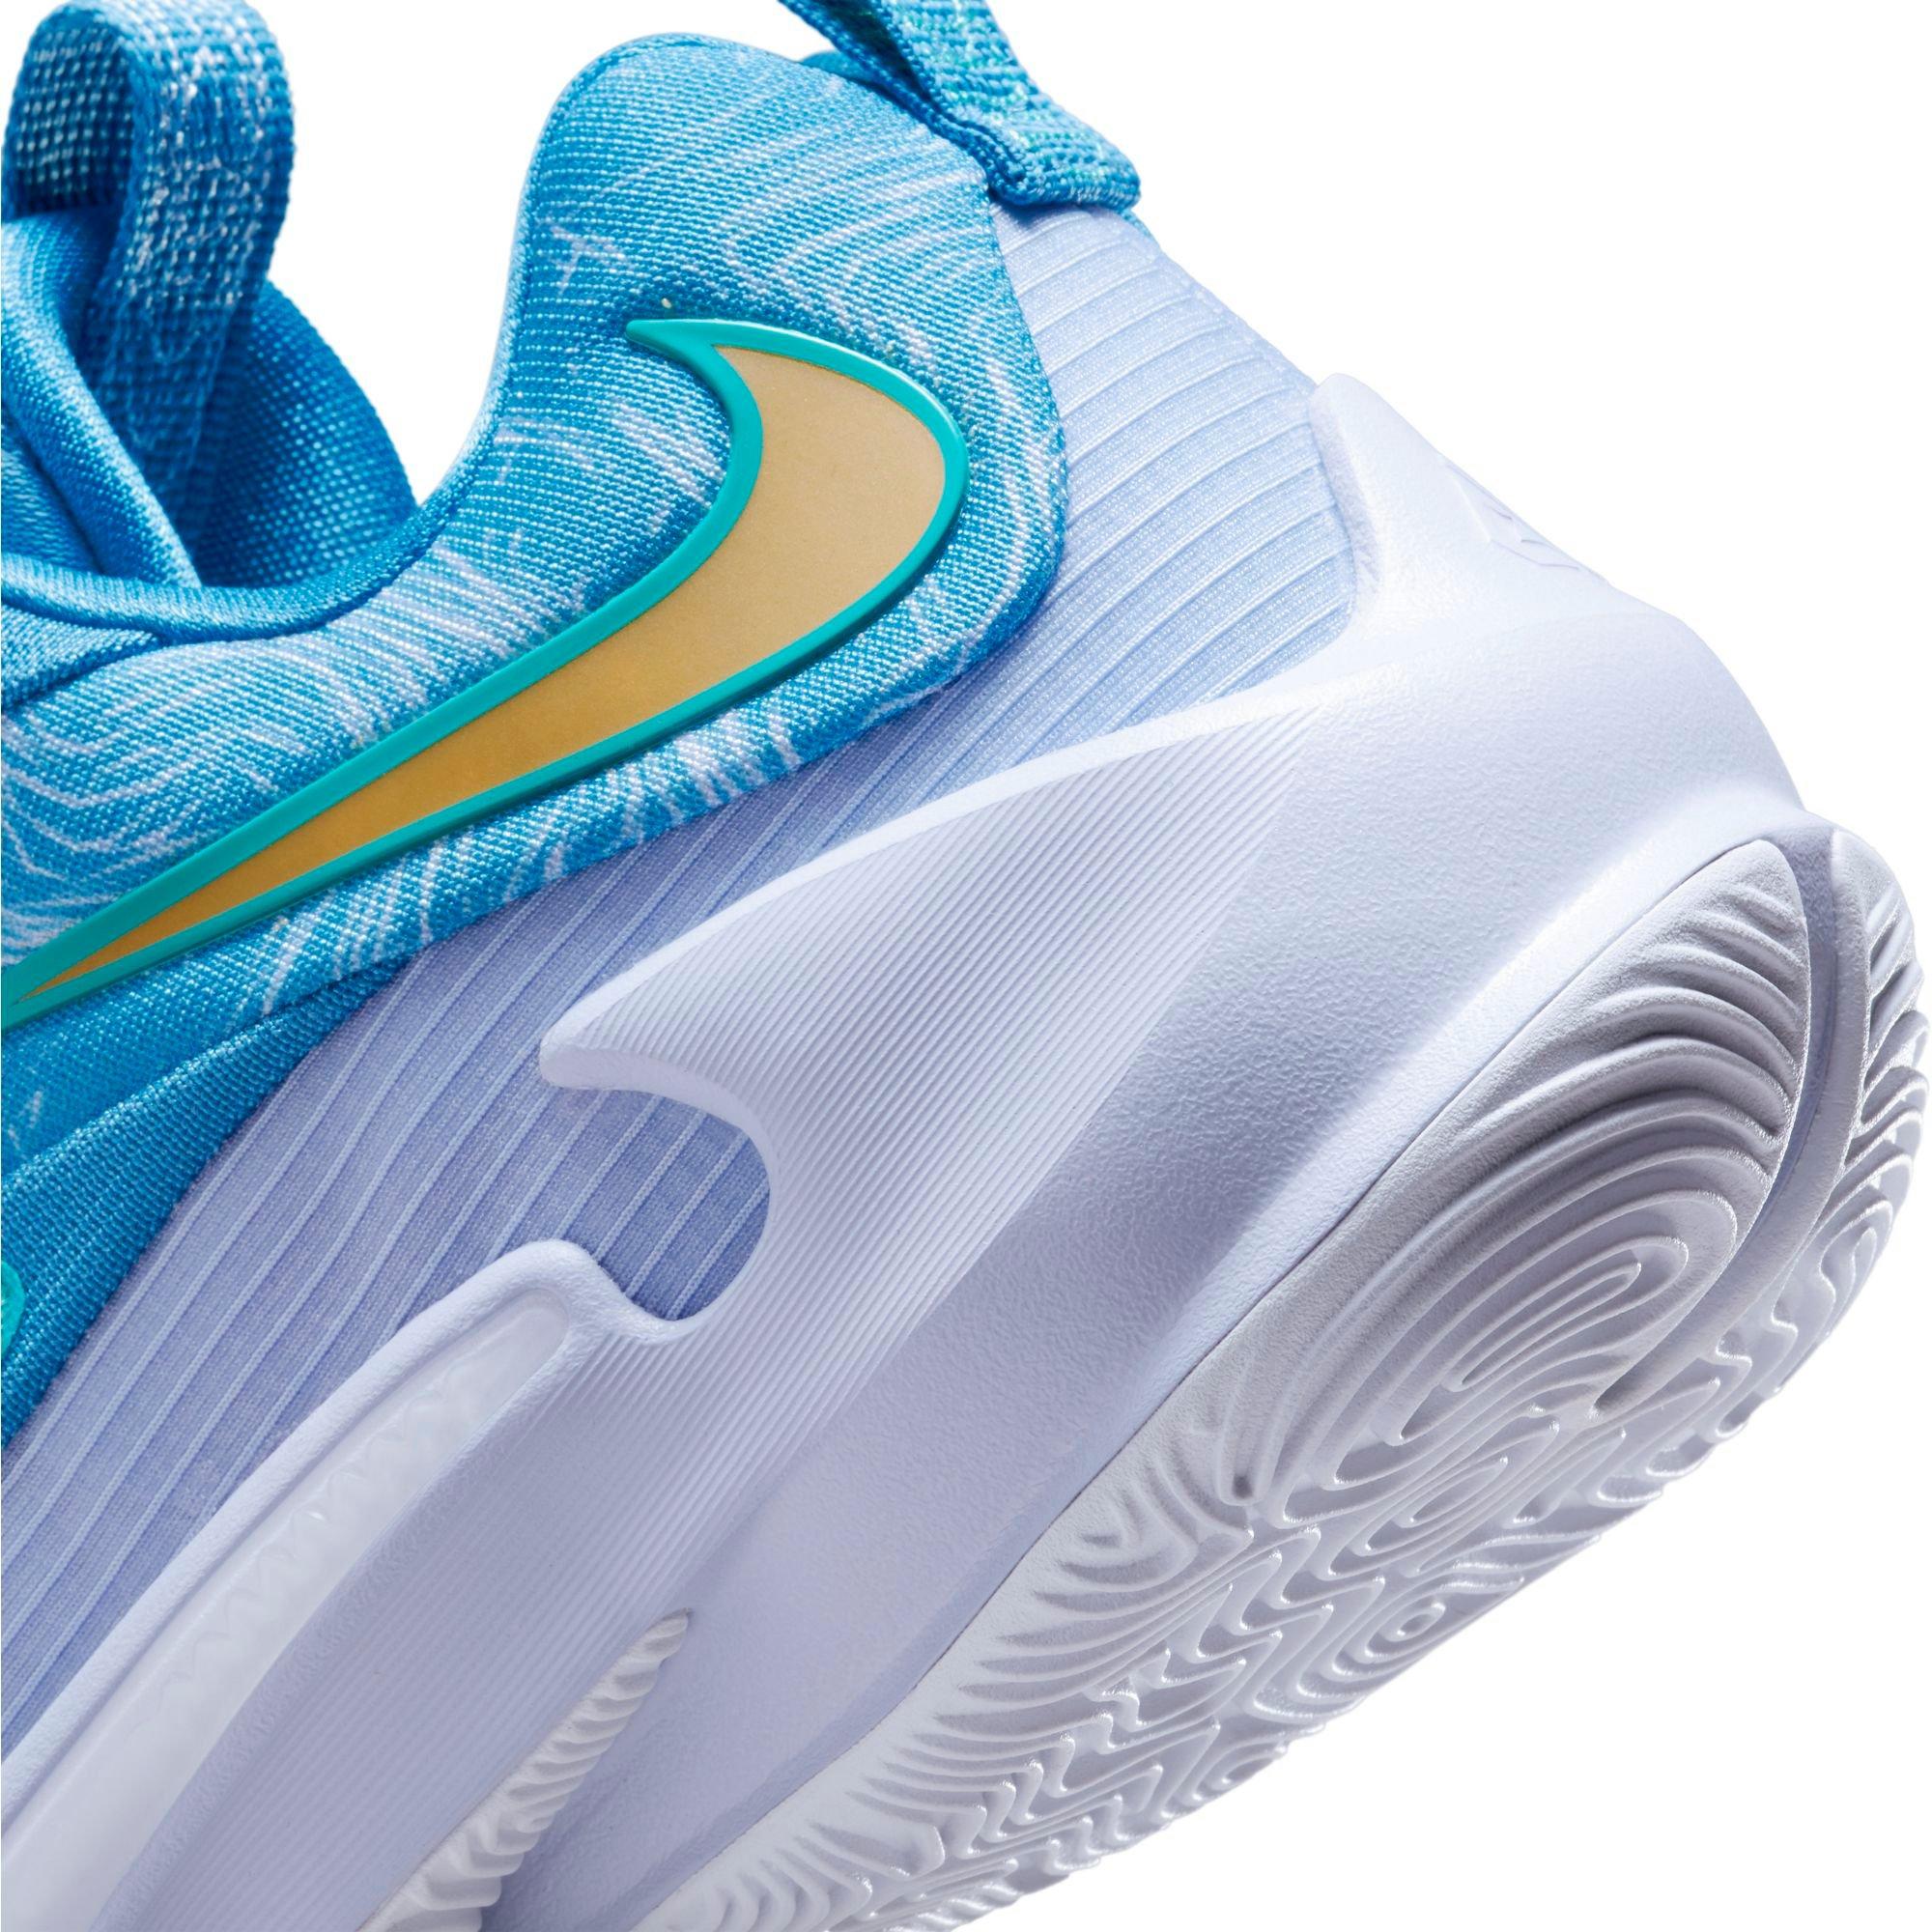 Nike Zoom Freak 3 Blue/Metallic Gold/Ghost" Men's Basketball Shoe